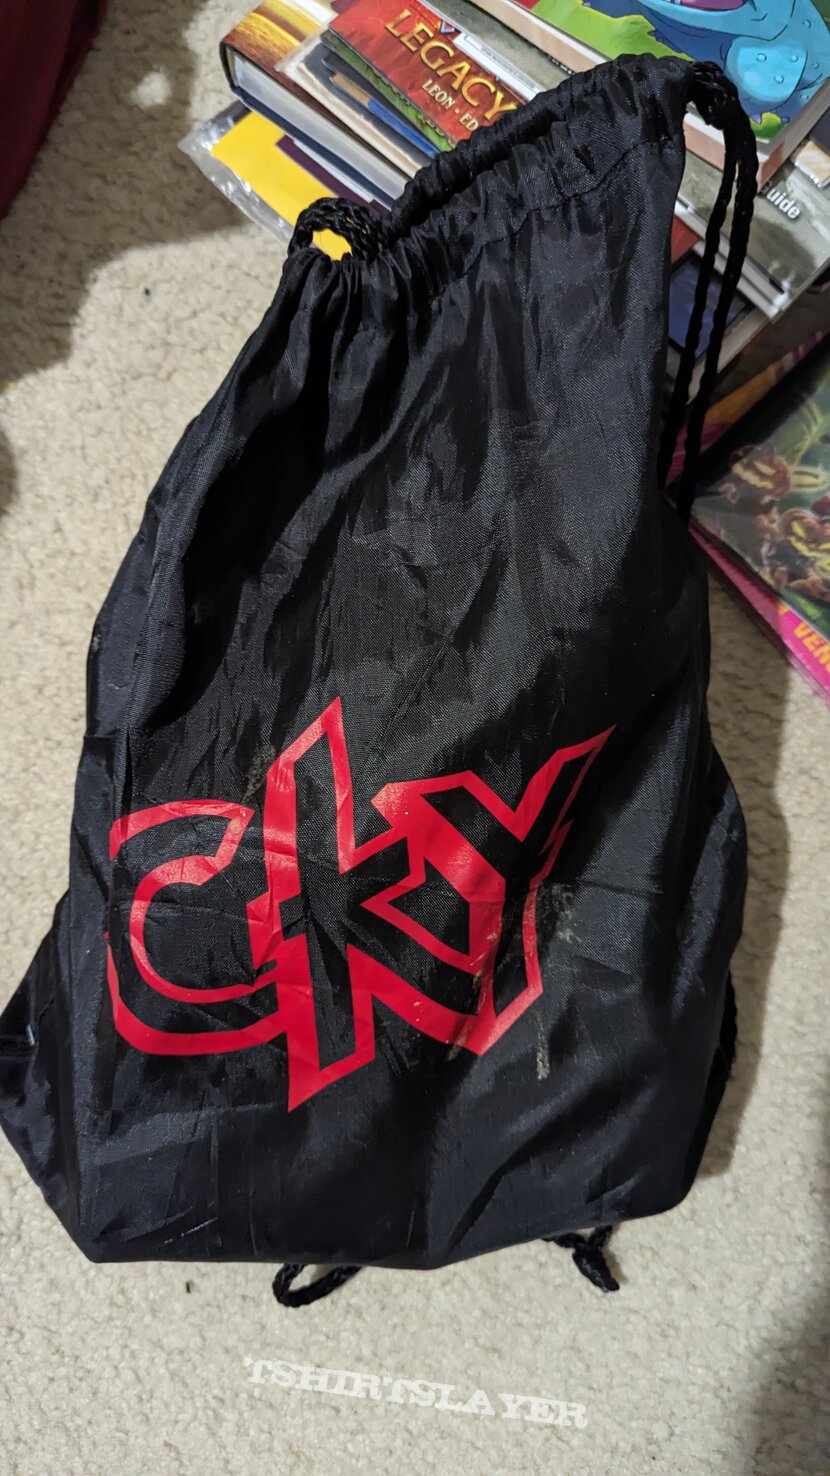 Cky drawstring bag